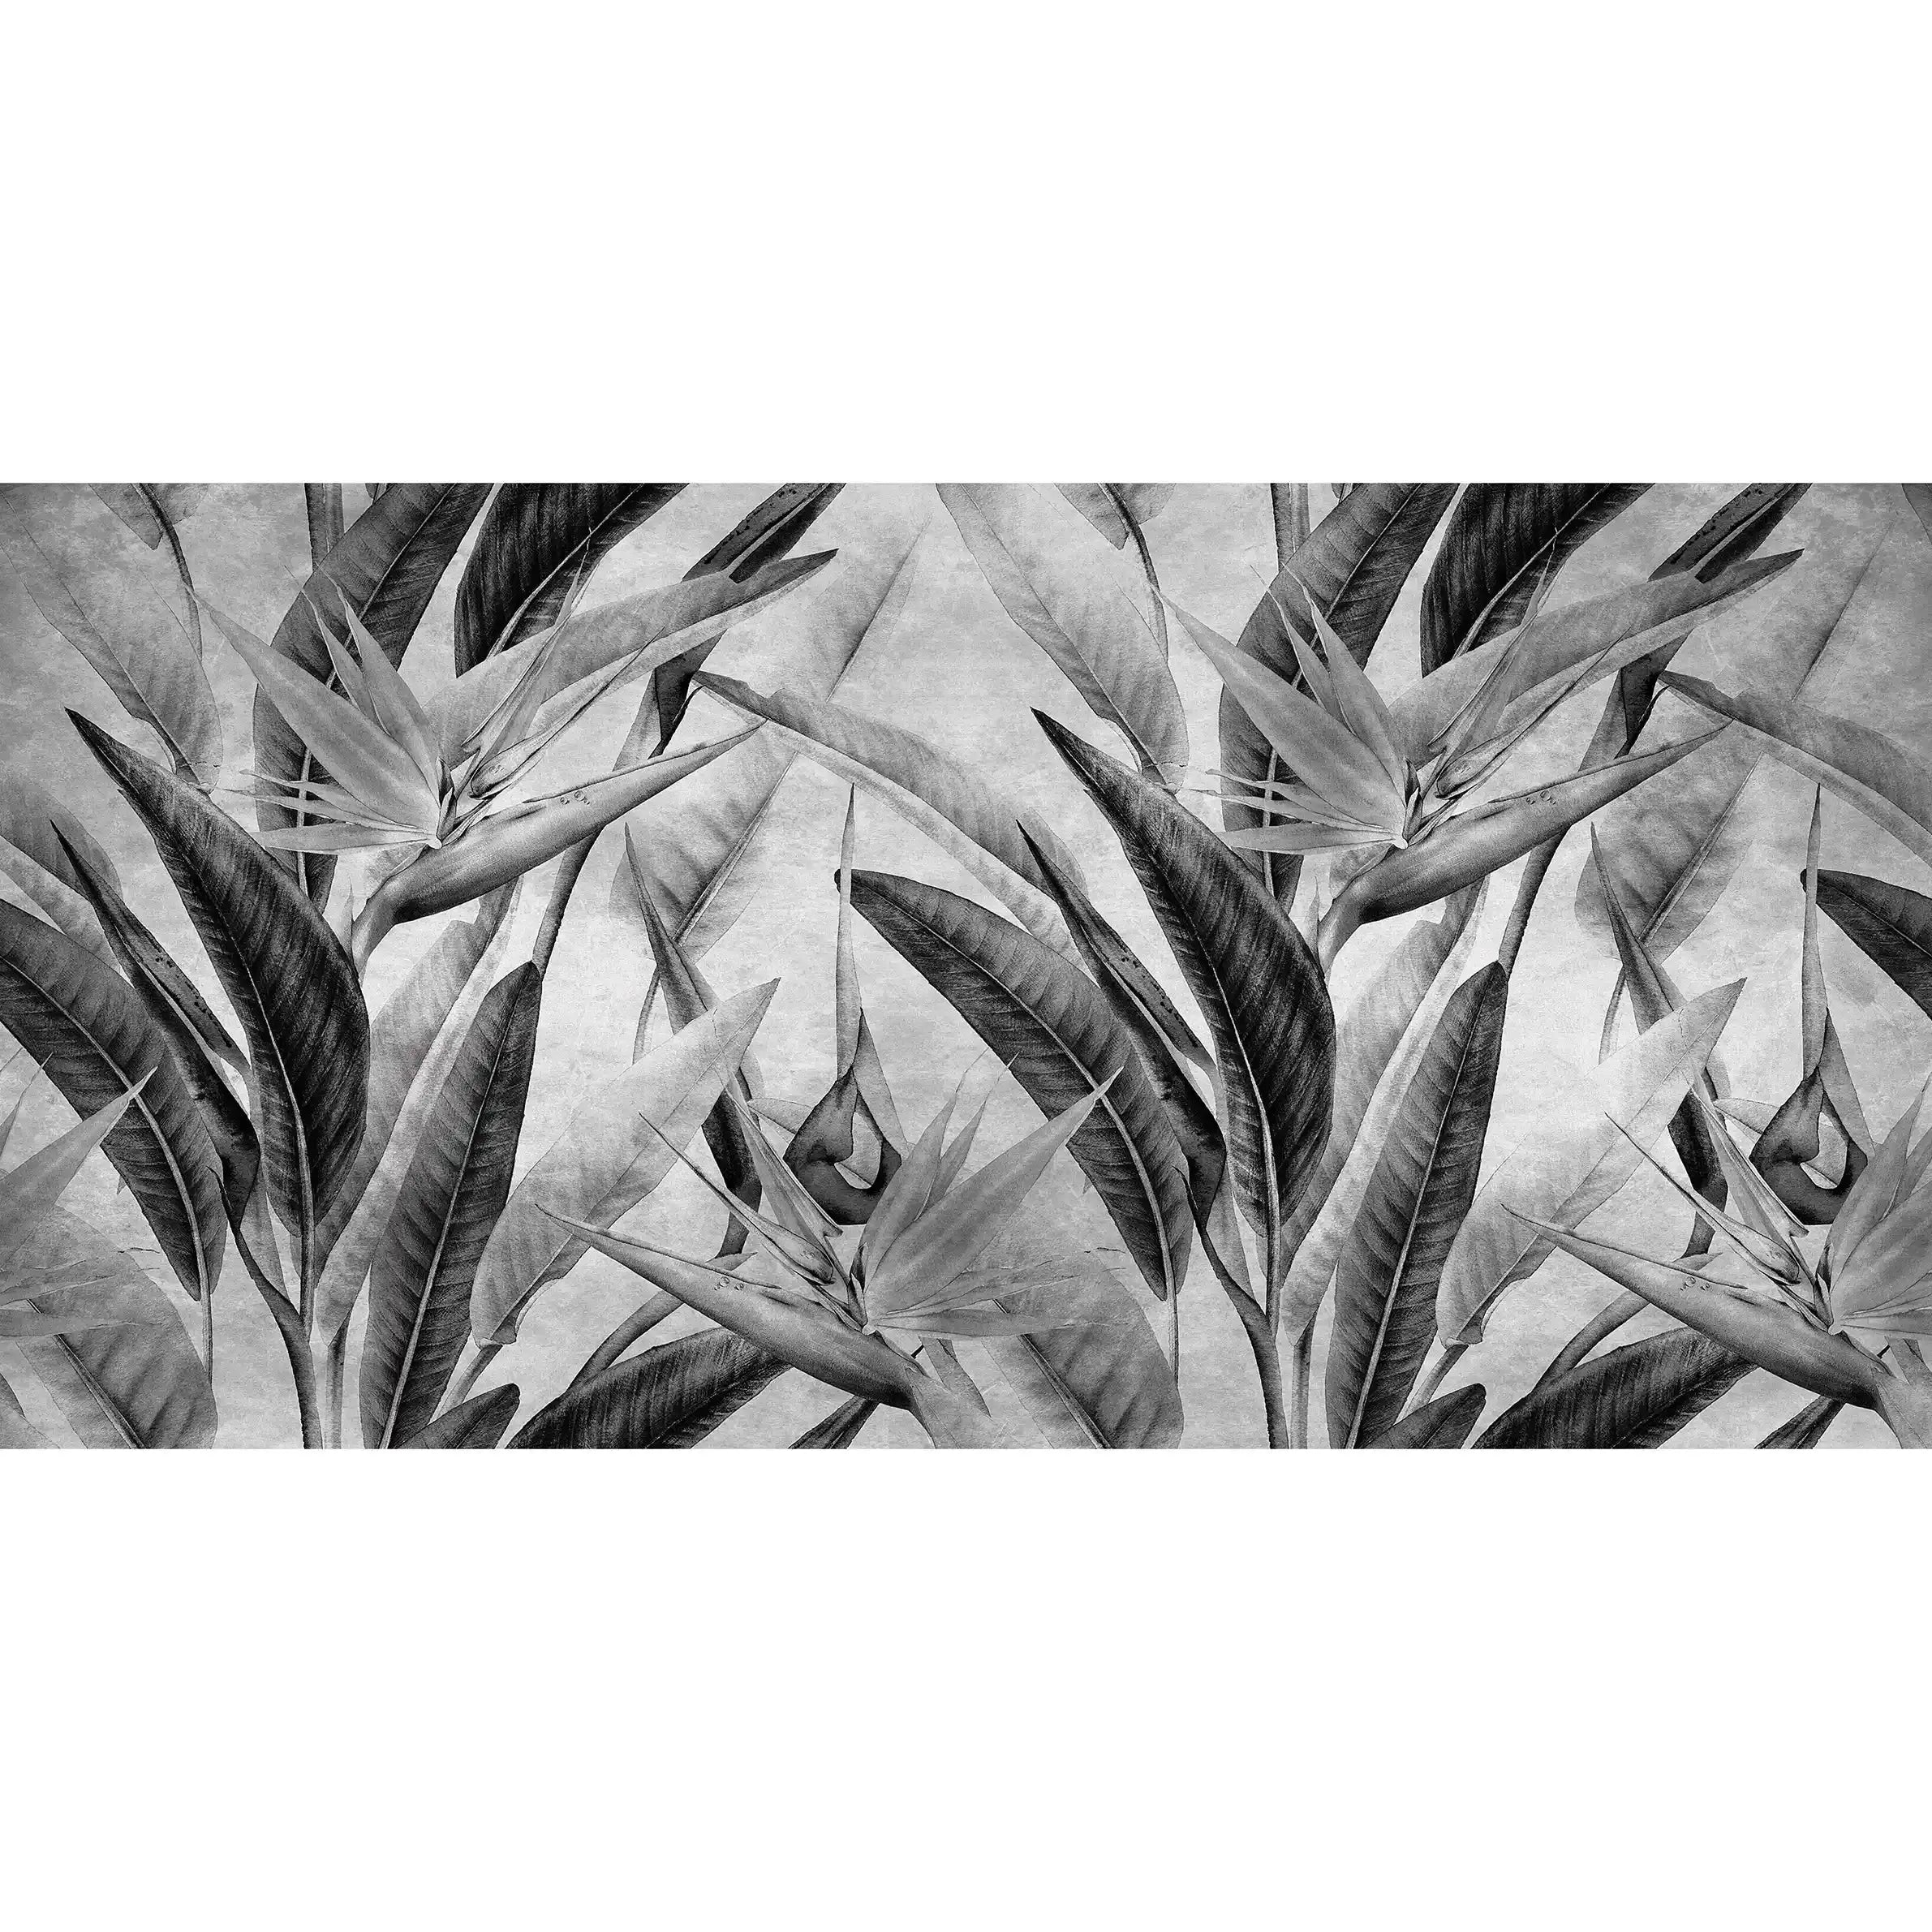 3039-E / Tropical Bird of Paradise Peel and Stick Wallpaper – Vibrant Botanical Design Wall Decor - Artevella